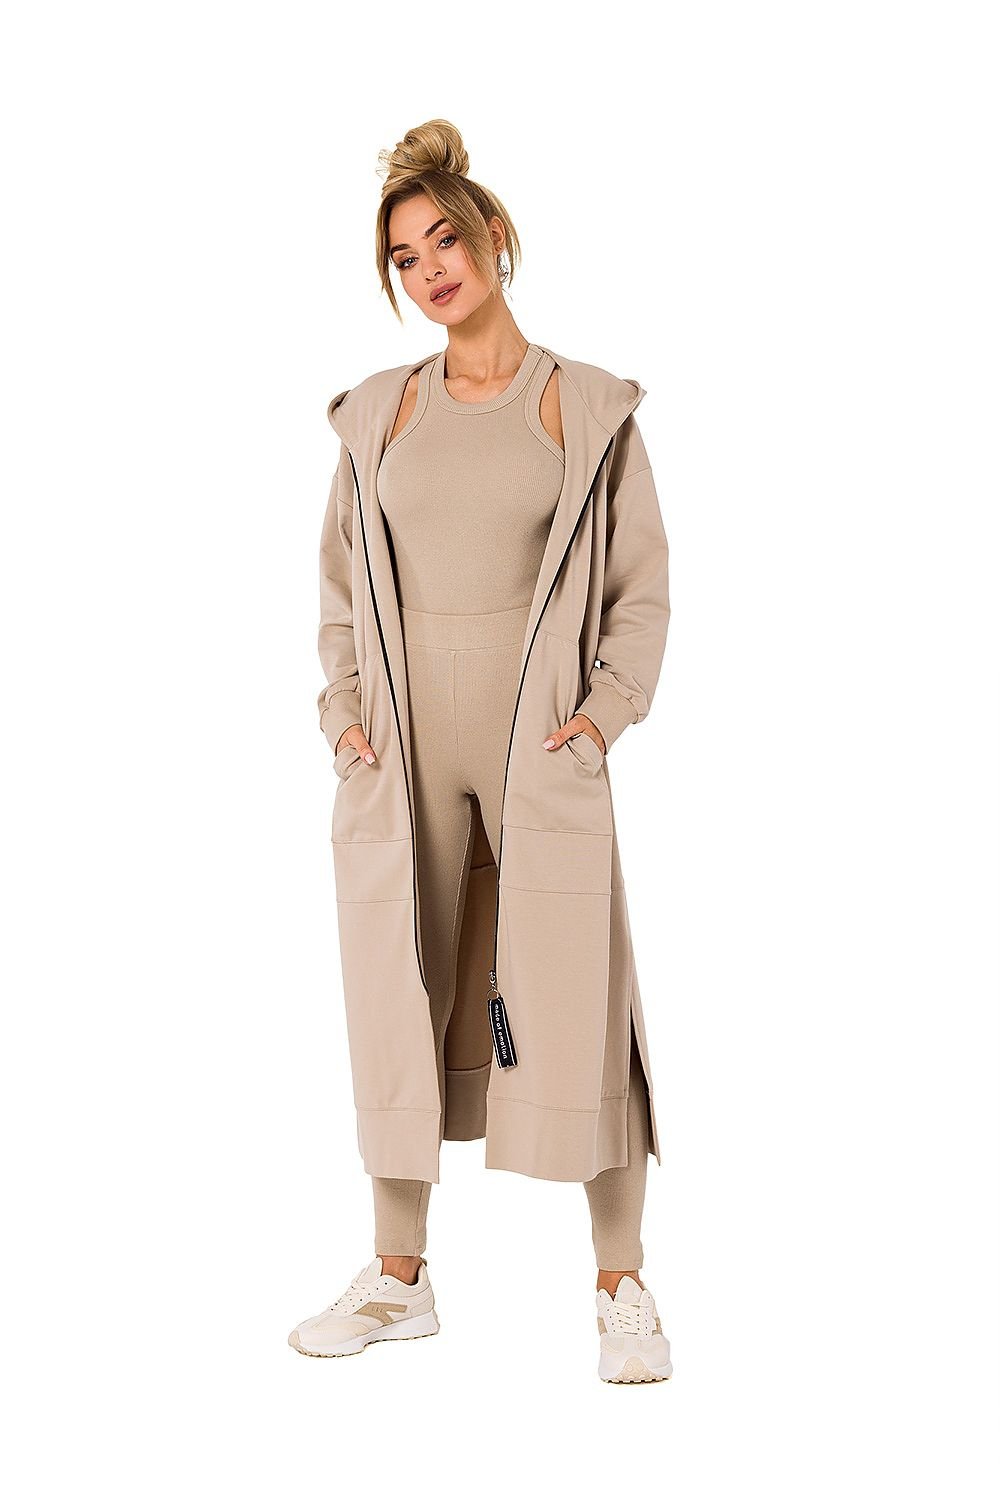 TEEK - Plus Size Zip Hoodie Sweatshirt Coat COAT TEEK MH beige 2XL/3XL 